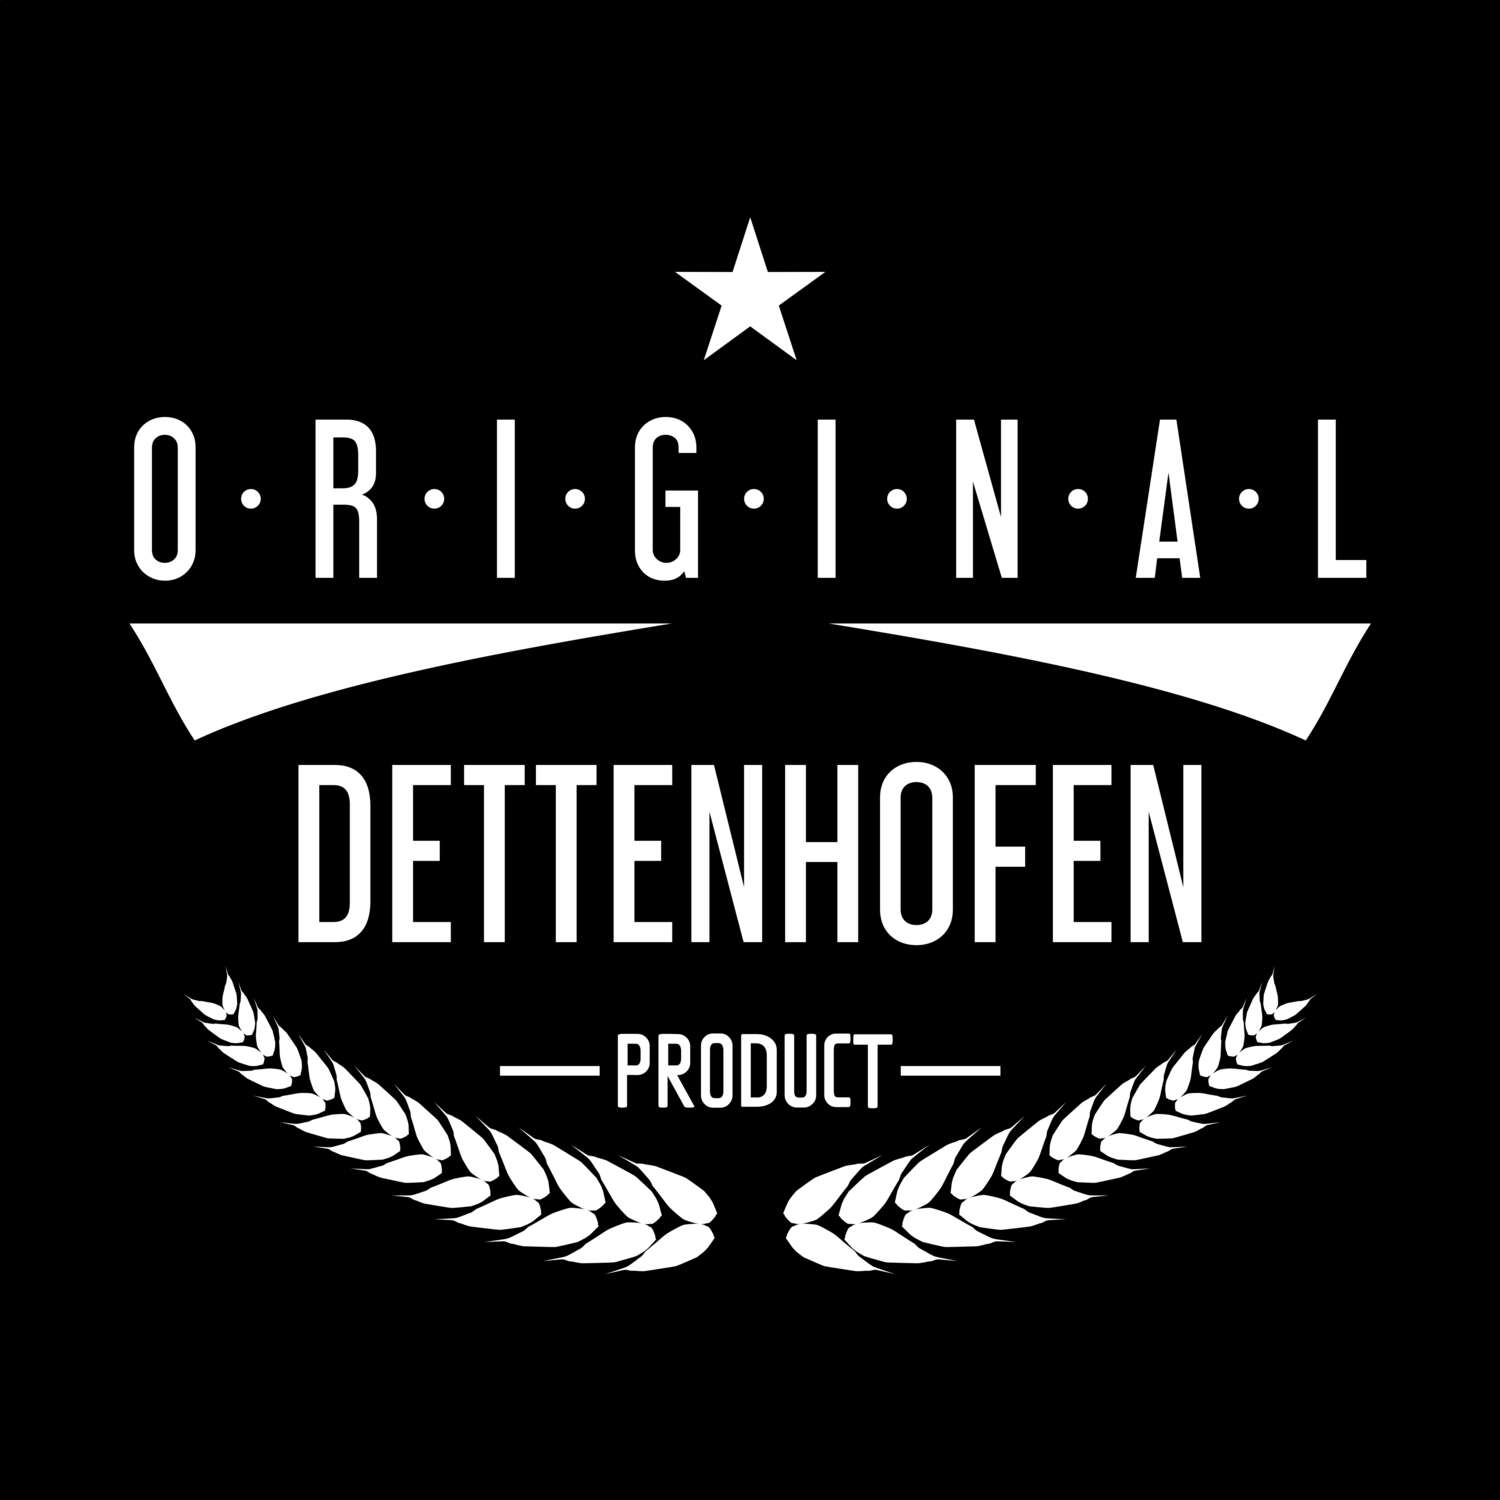 Dettenhofen T-Shirt »Original Product«